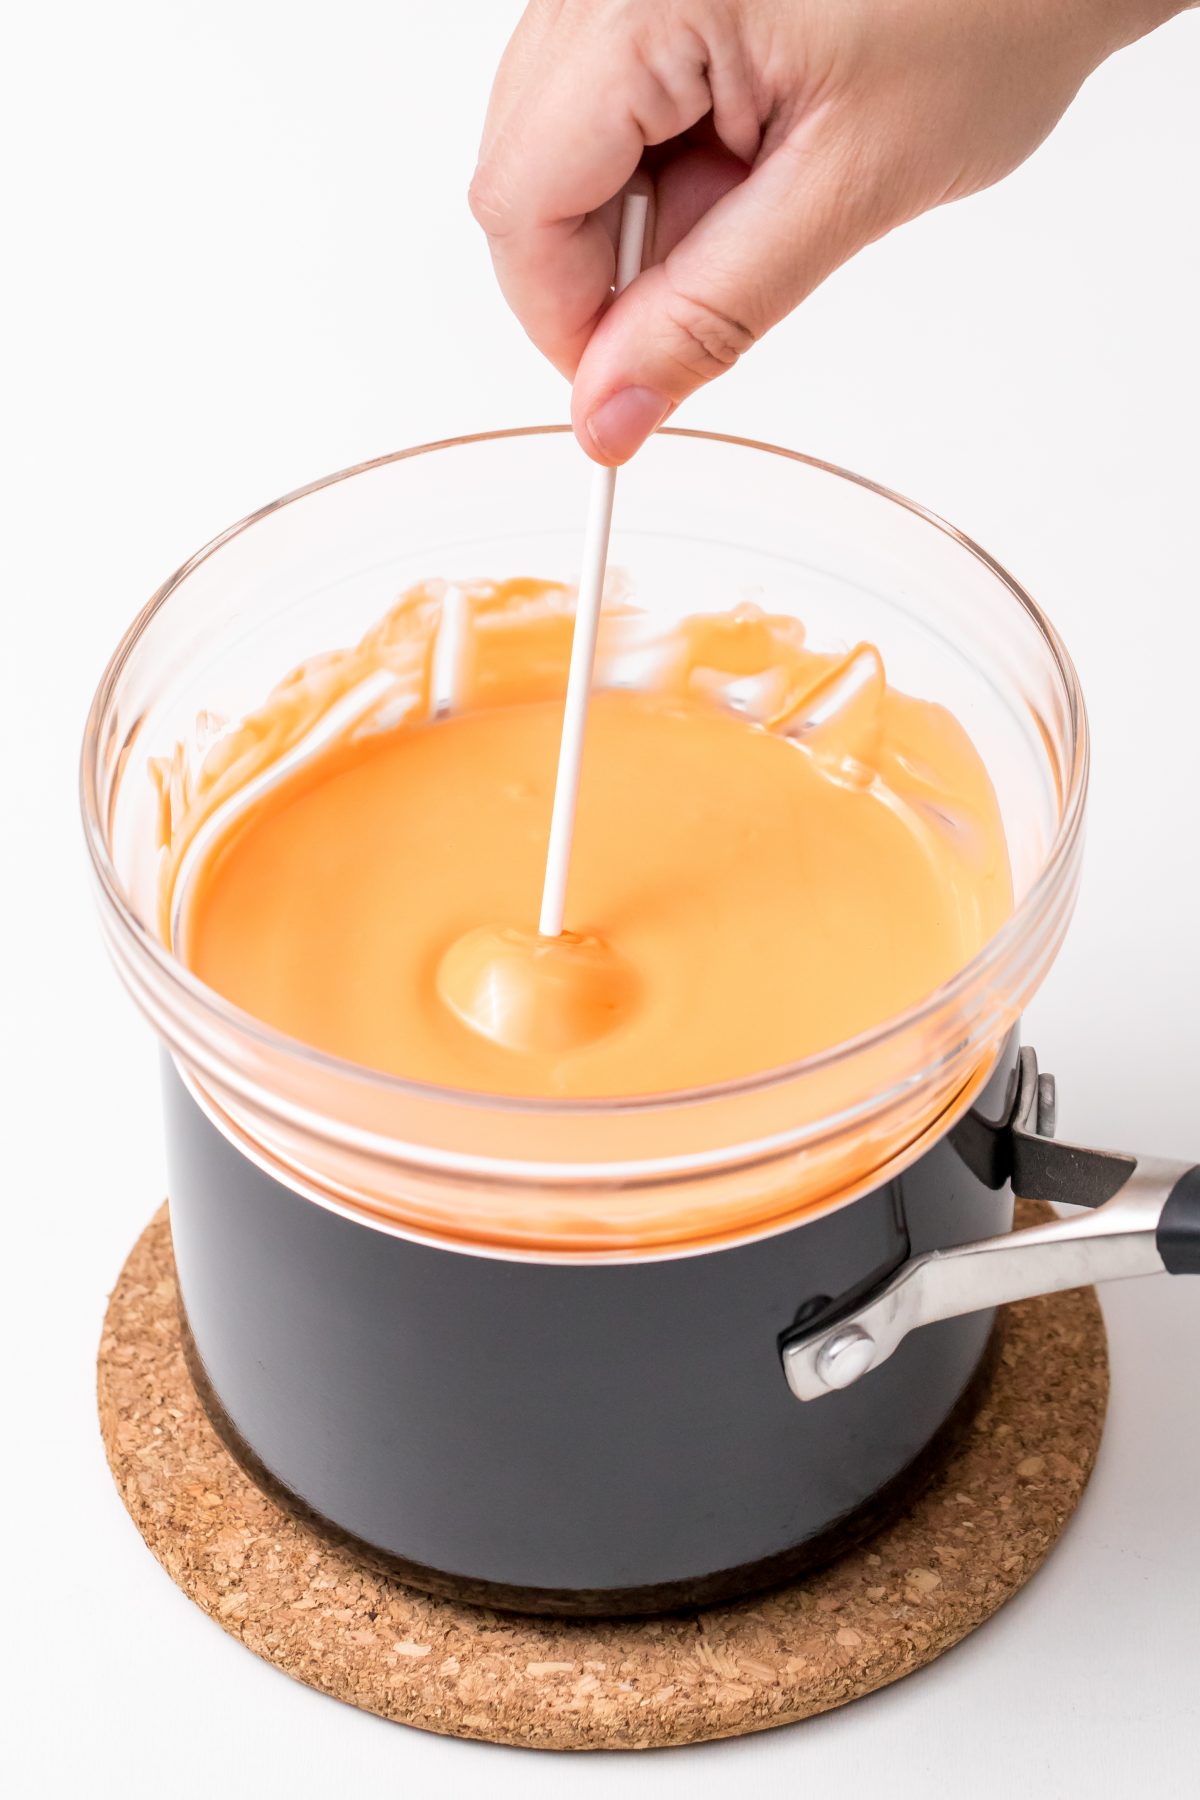 Dip each Monster cake-pop into melted orange Candy Melts